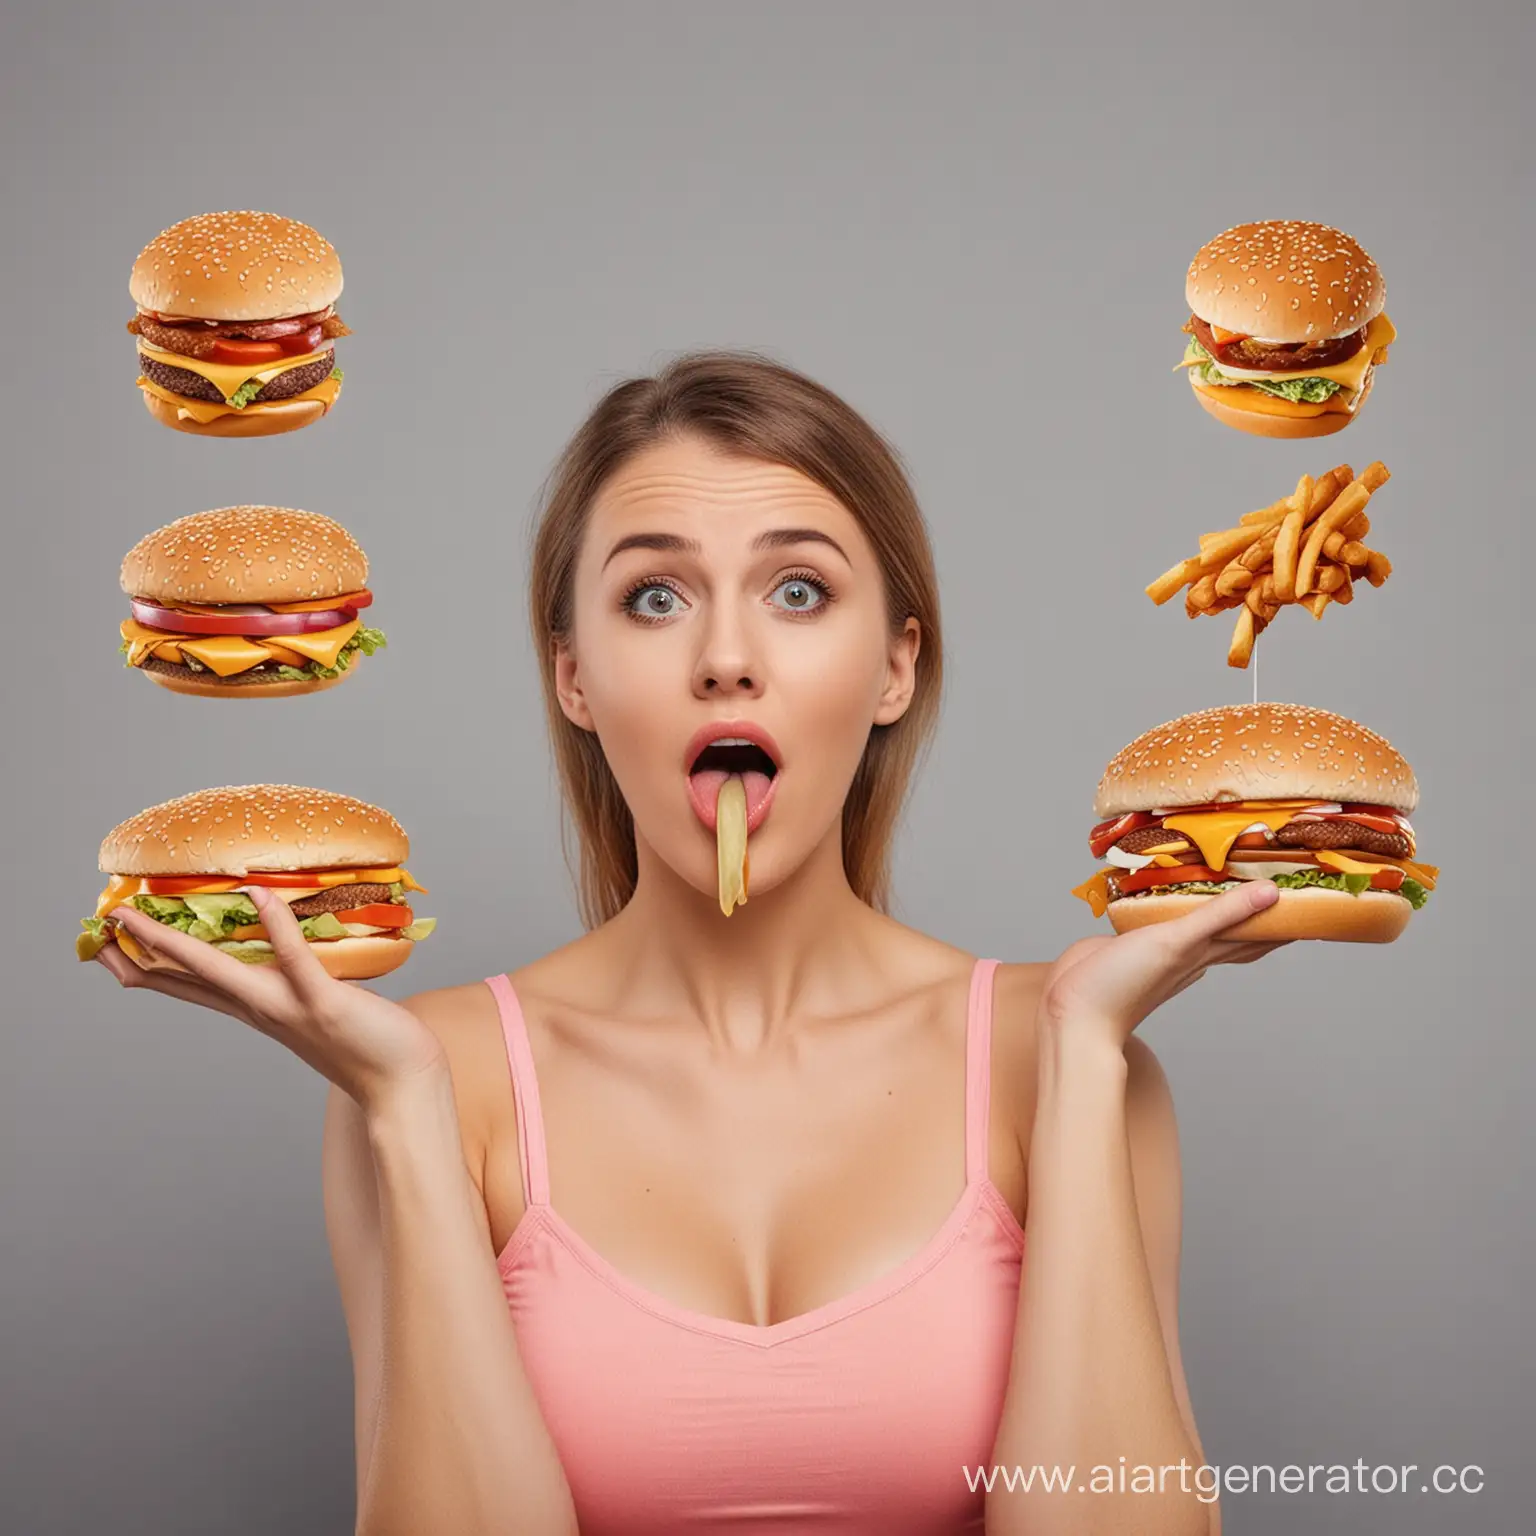 Woman-Choosing-Junk-Food-Over-Healthy-Options